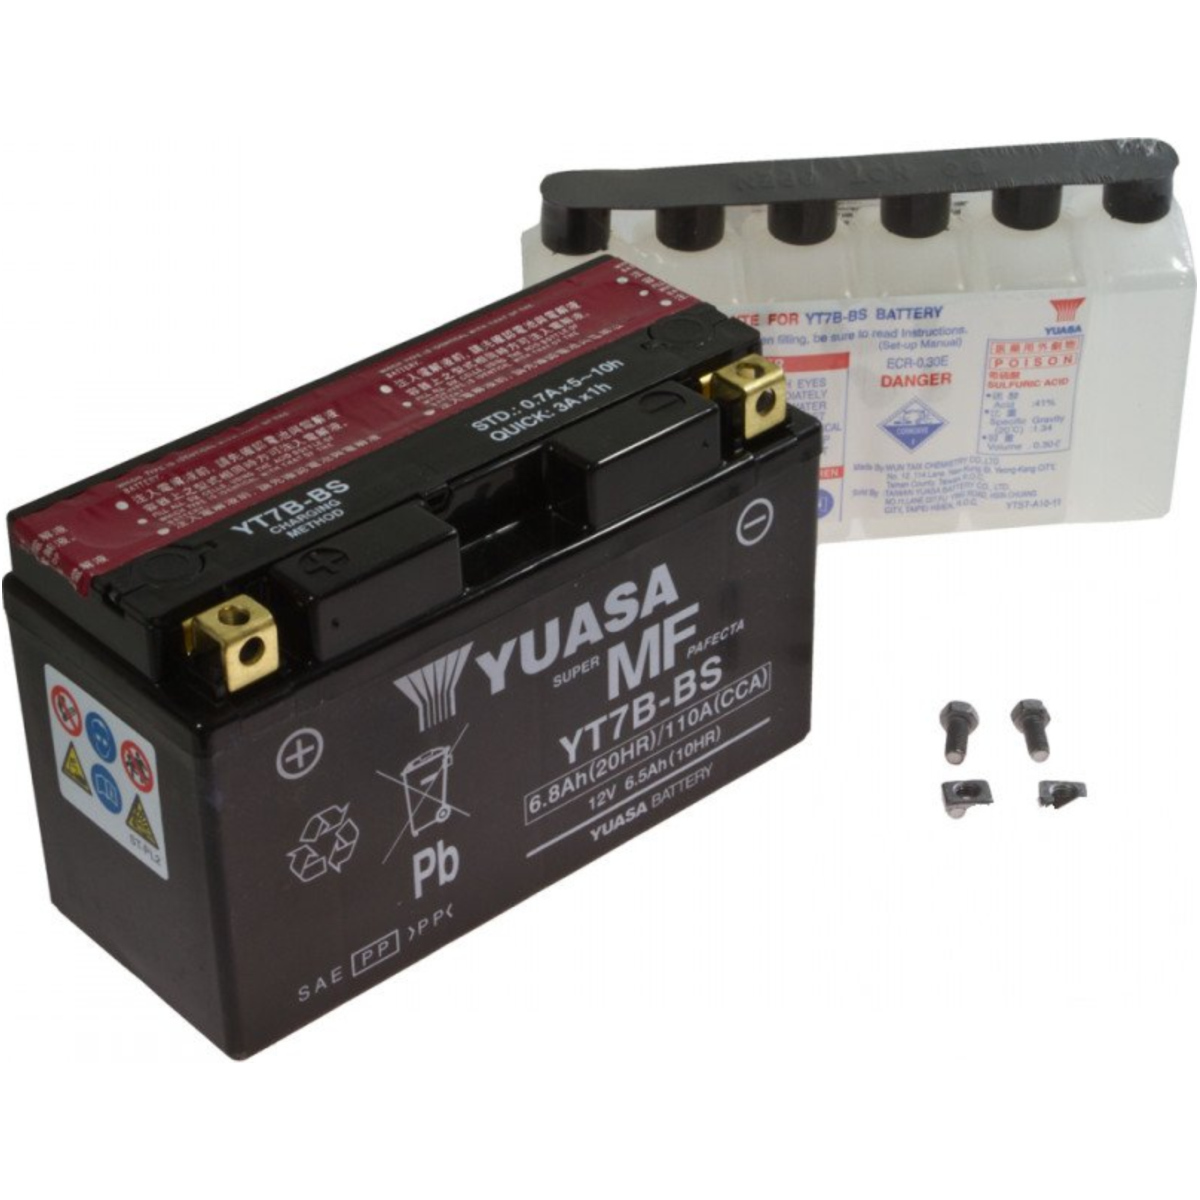 Yuasa yt7b-bs(cp) motorradbatterie yt7b-bs von Yuasa